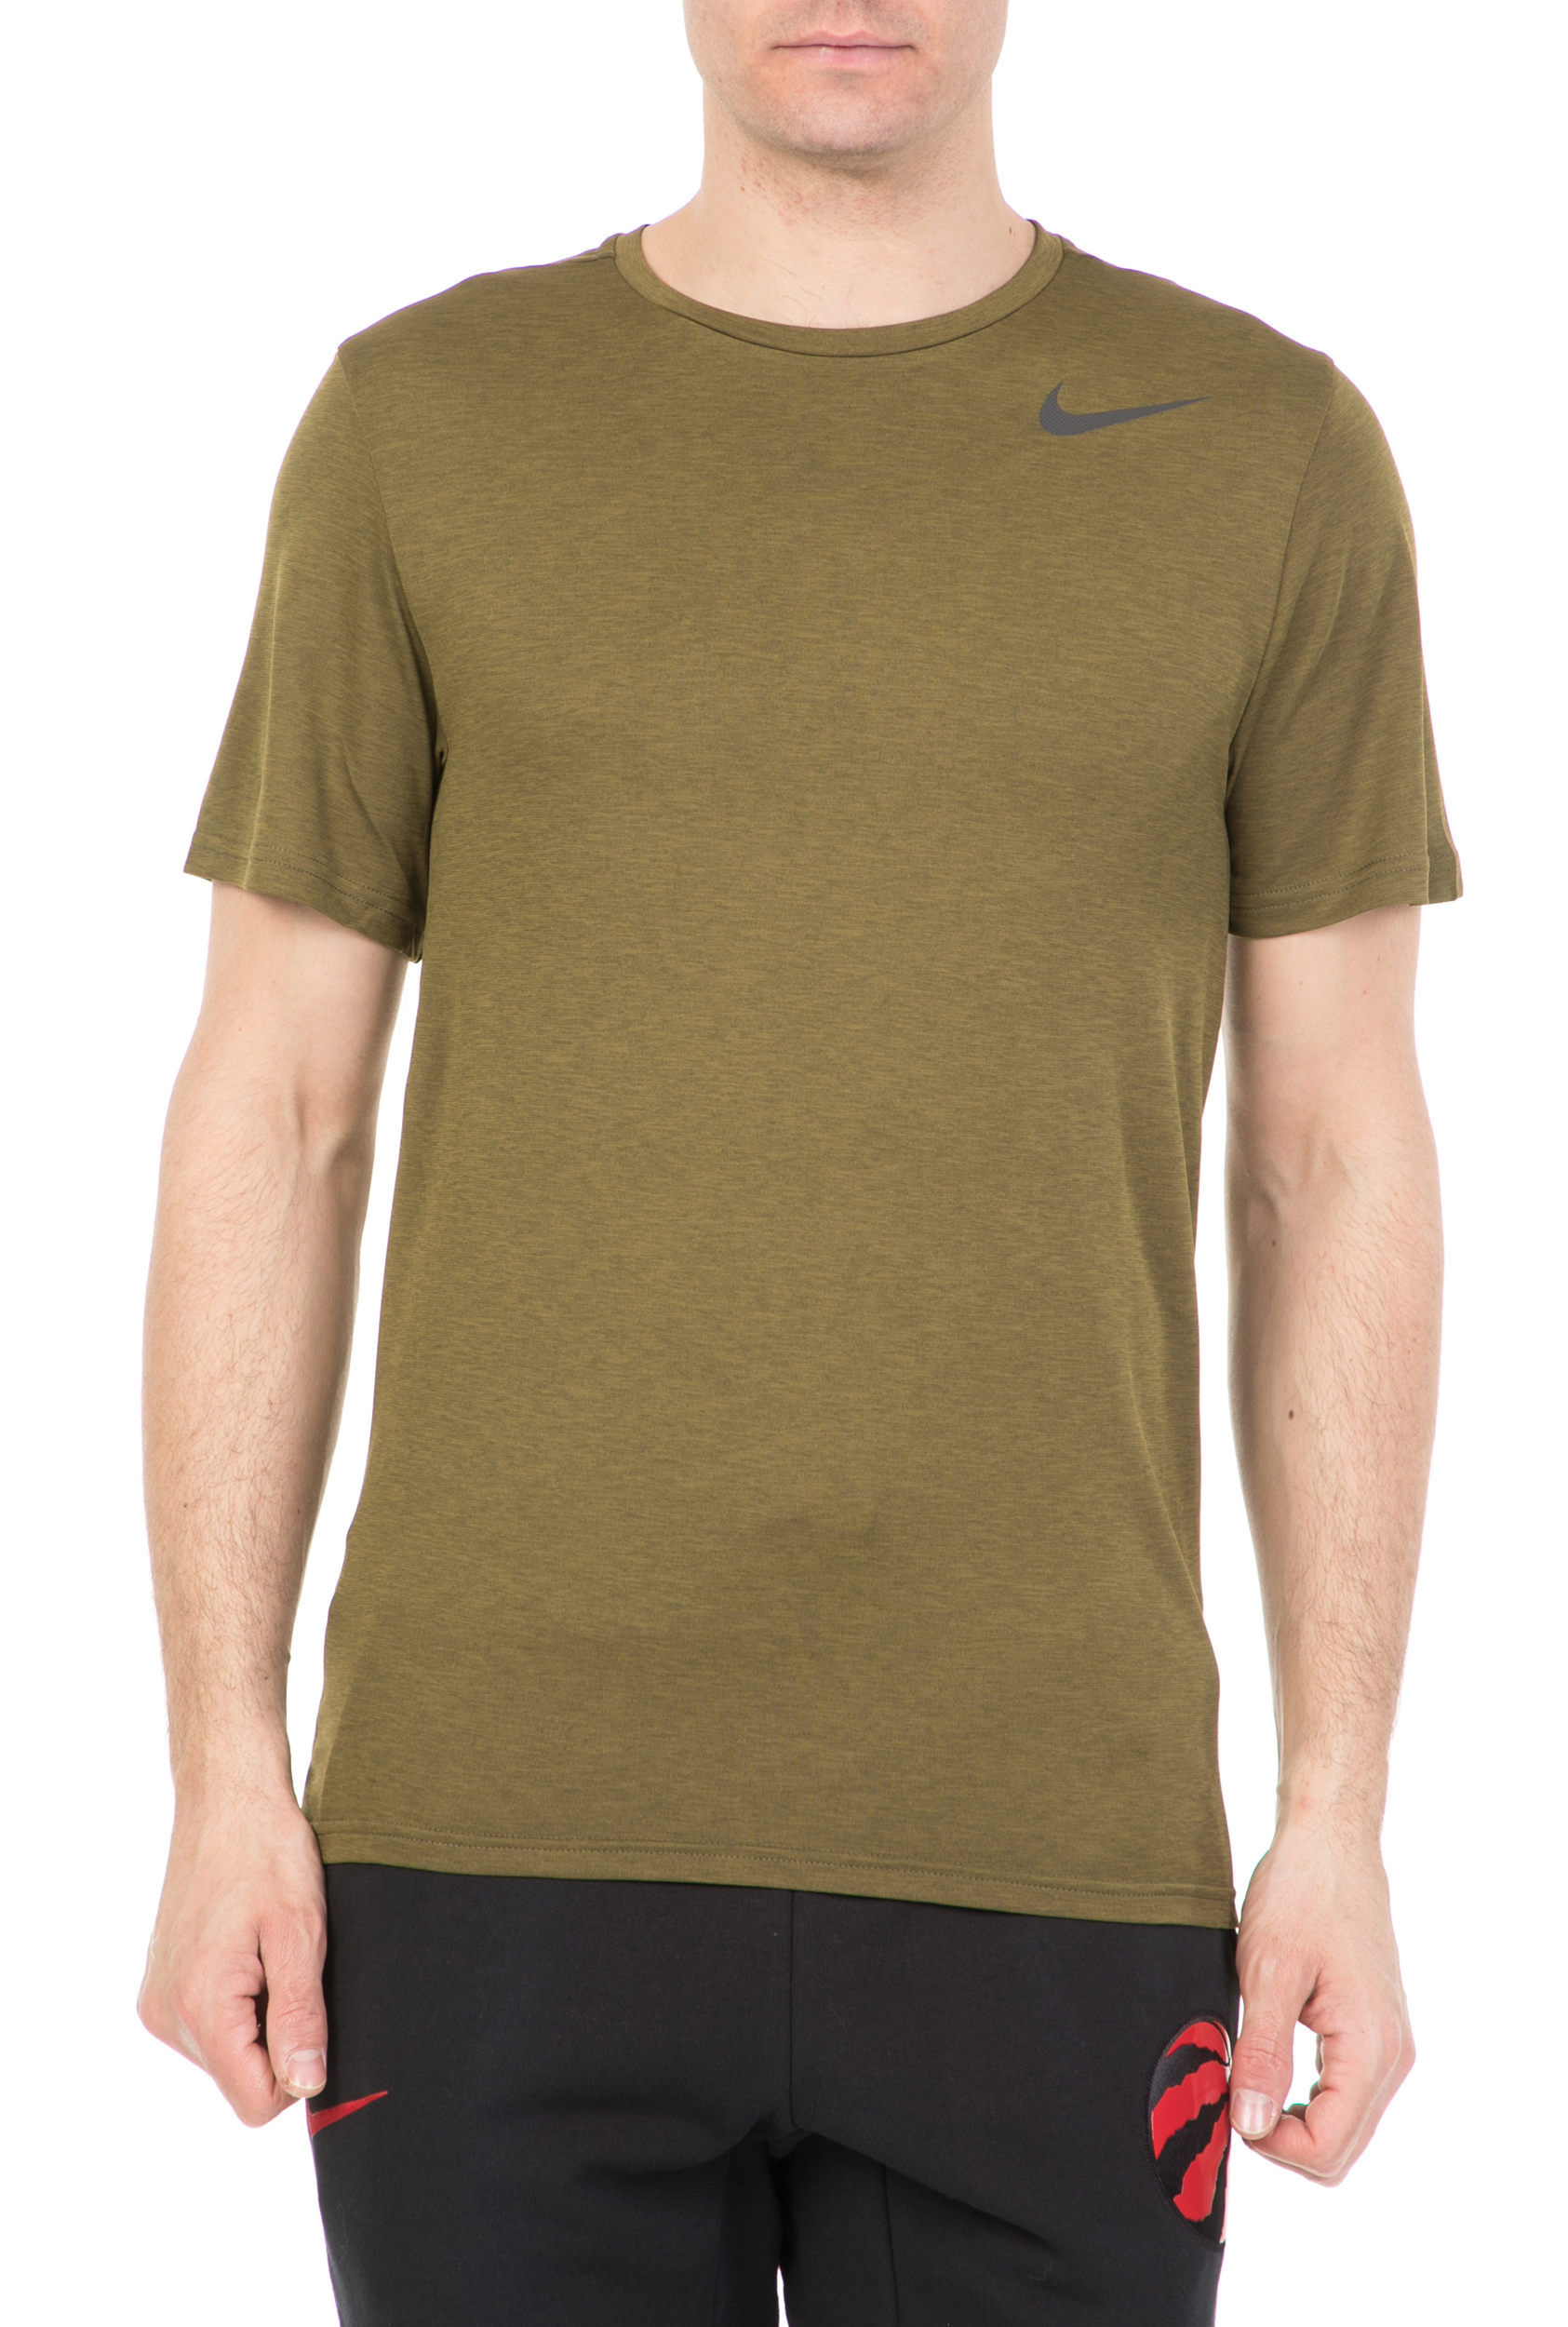 NIKE - Ανδρική κοντομάνικη μπλούζα NIKE BREATHE χακί Ανδρικά/Ρούχα/Αθλητικά/T-shirt